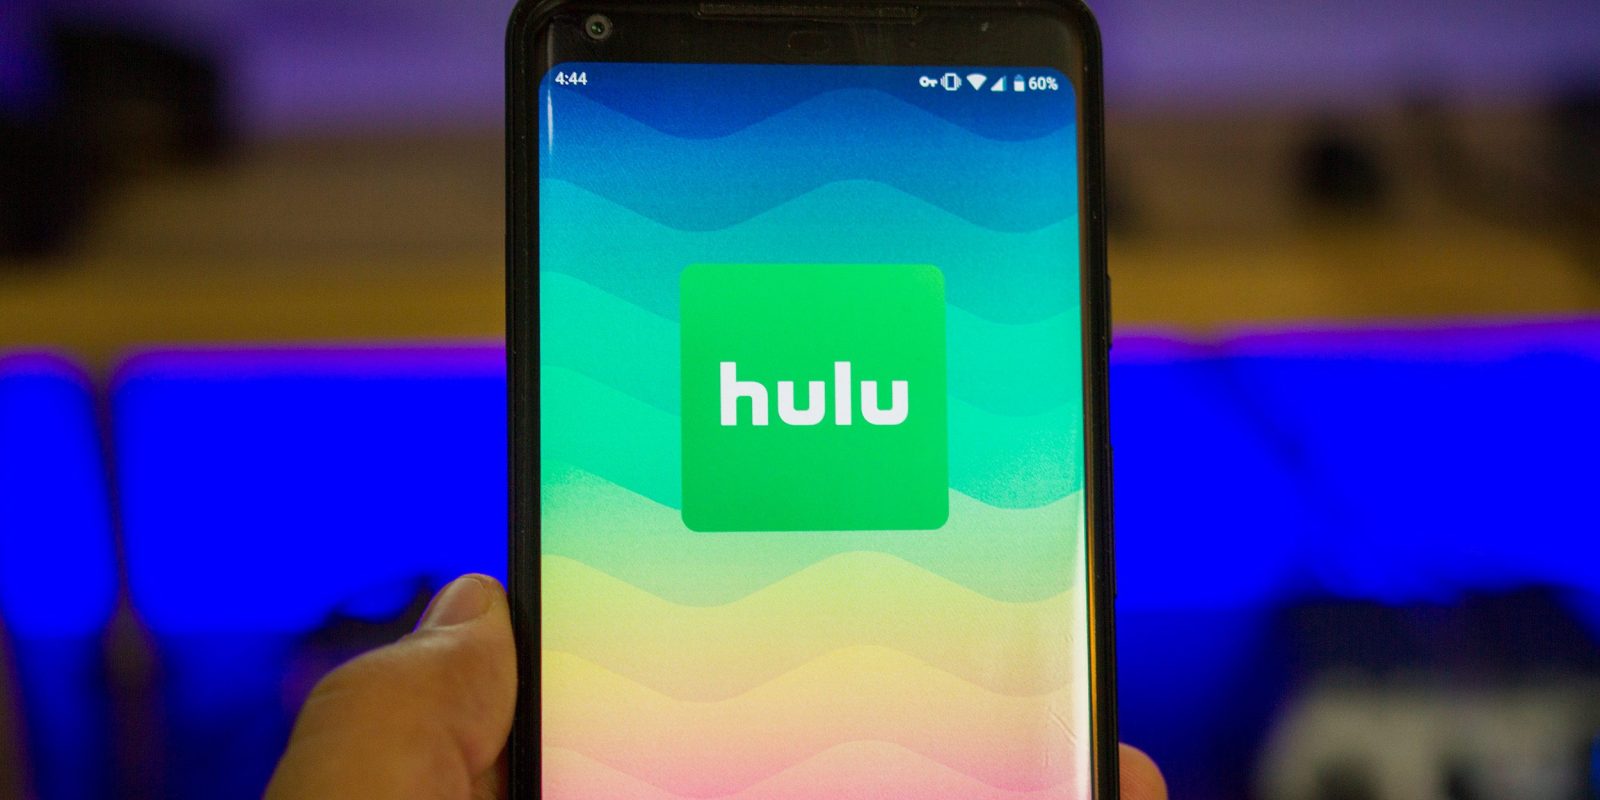 hulu android app